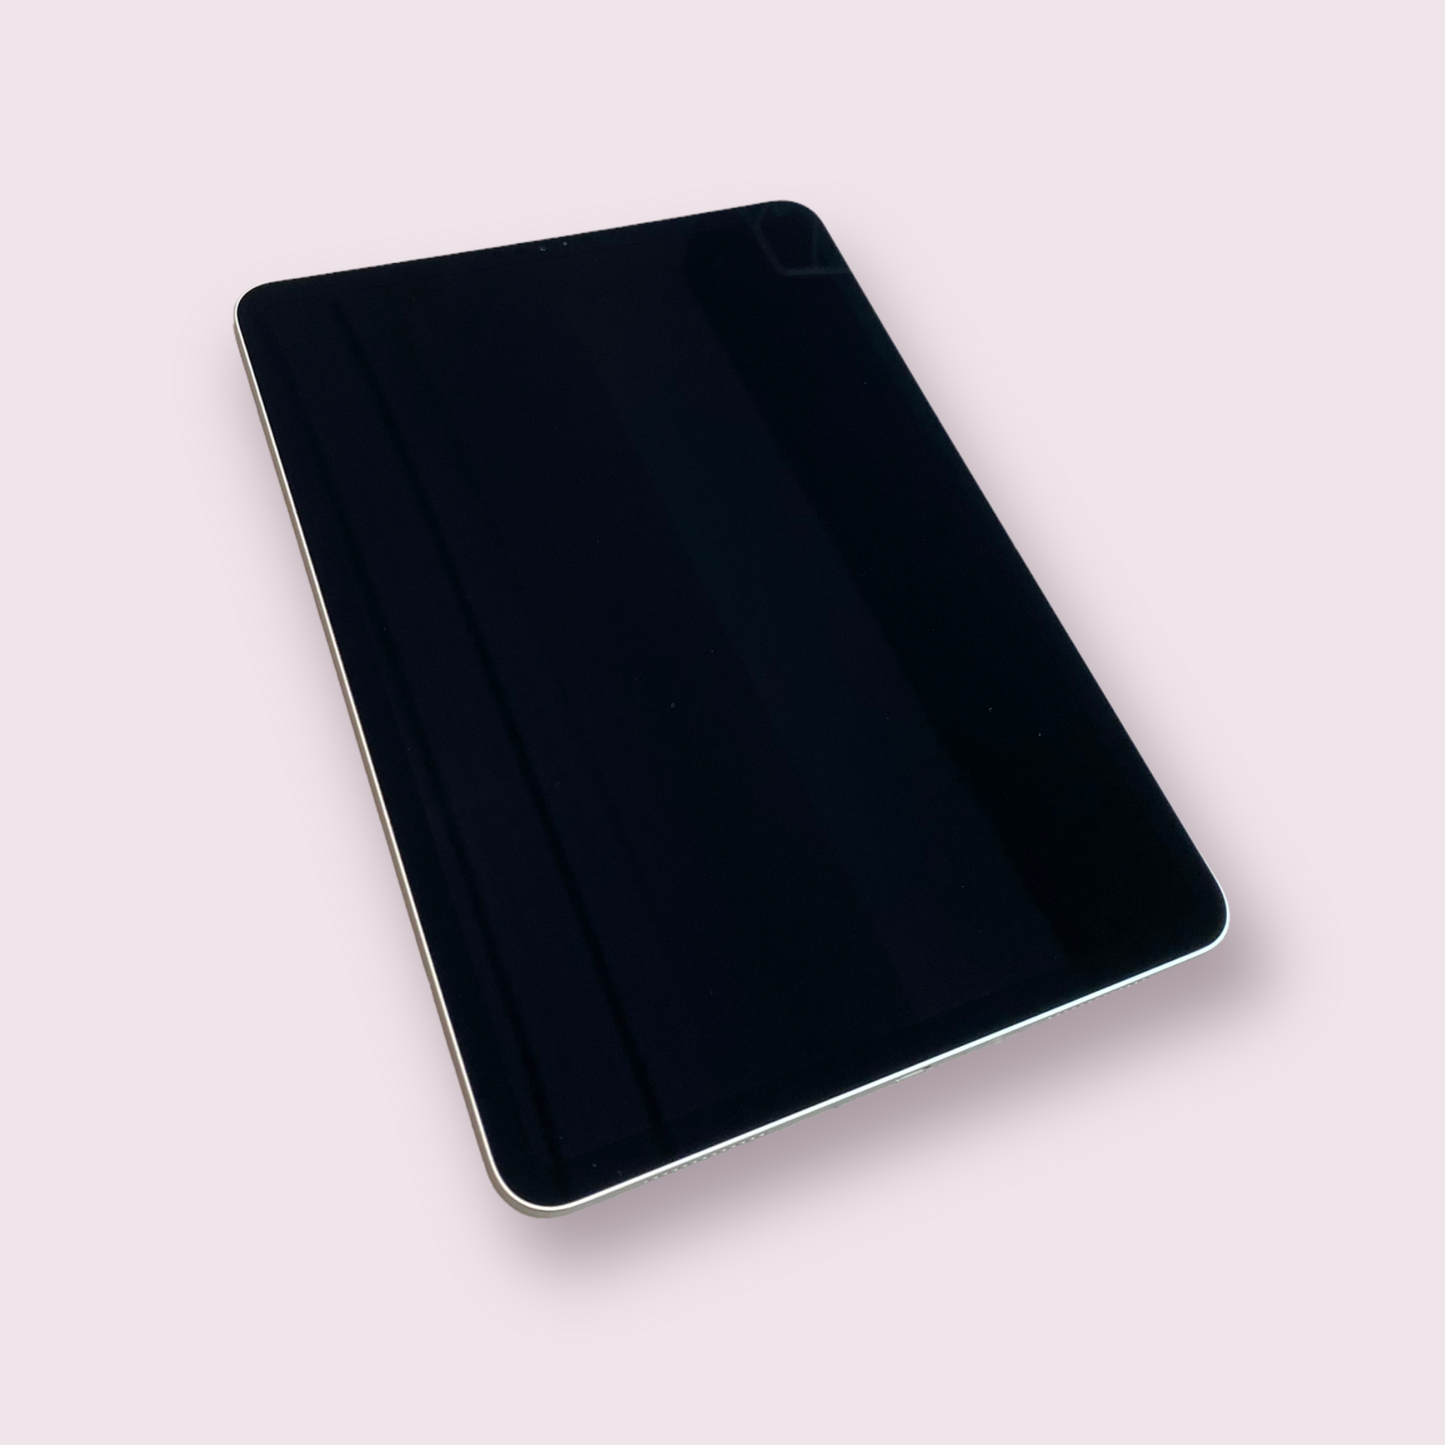 Apple iPad Pro 11" 1st Generation 64GB WIFI & Cellular Silver - Unlocked - Grade B